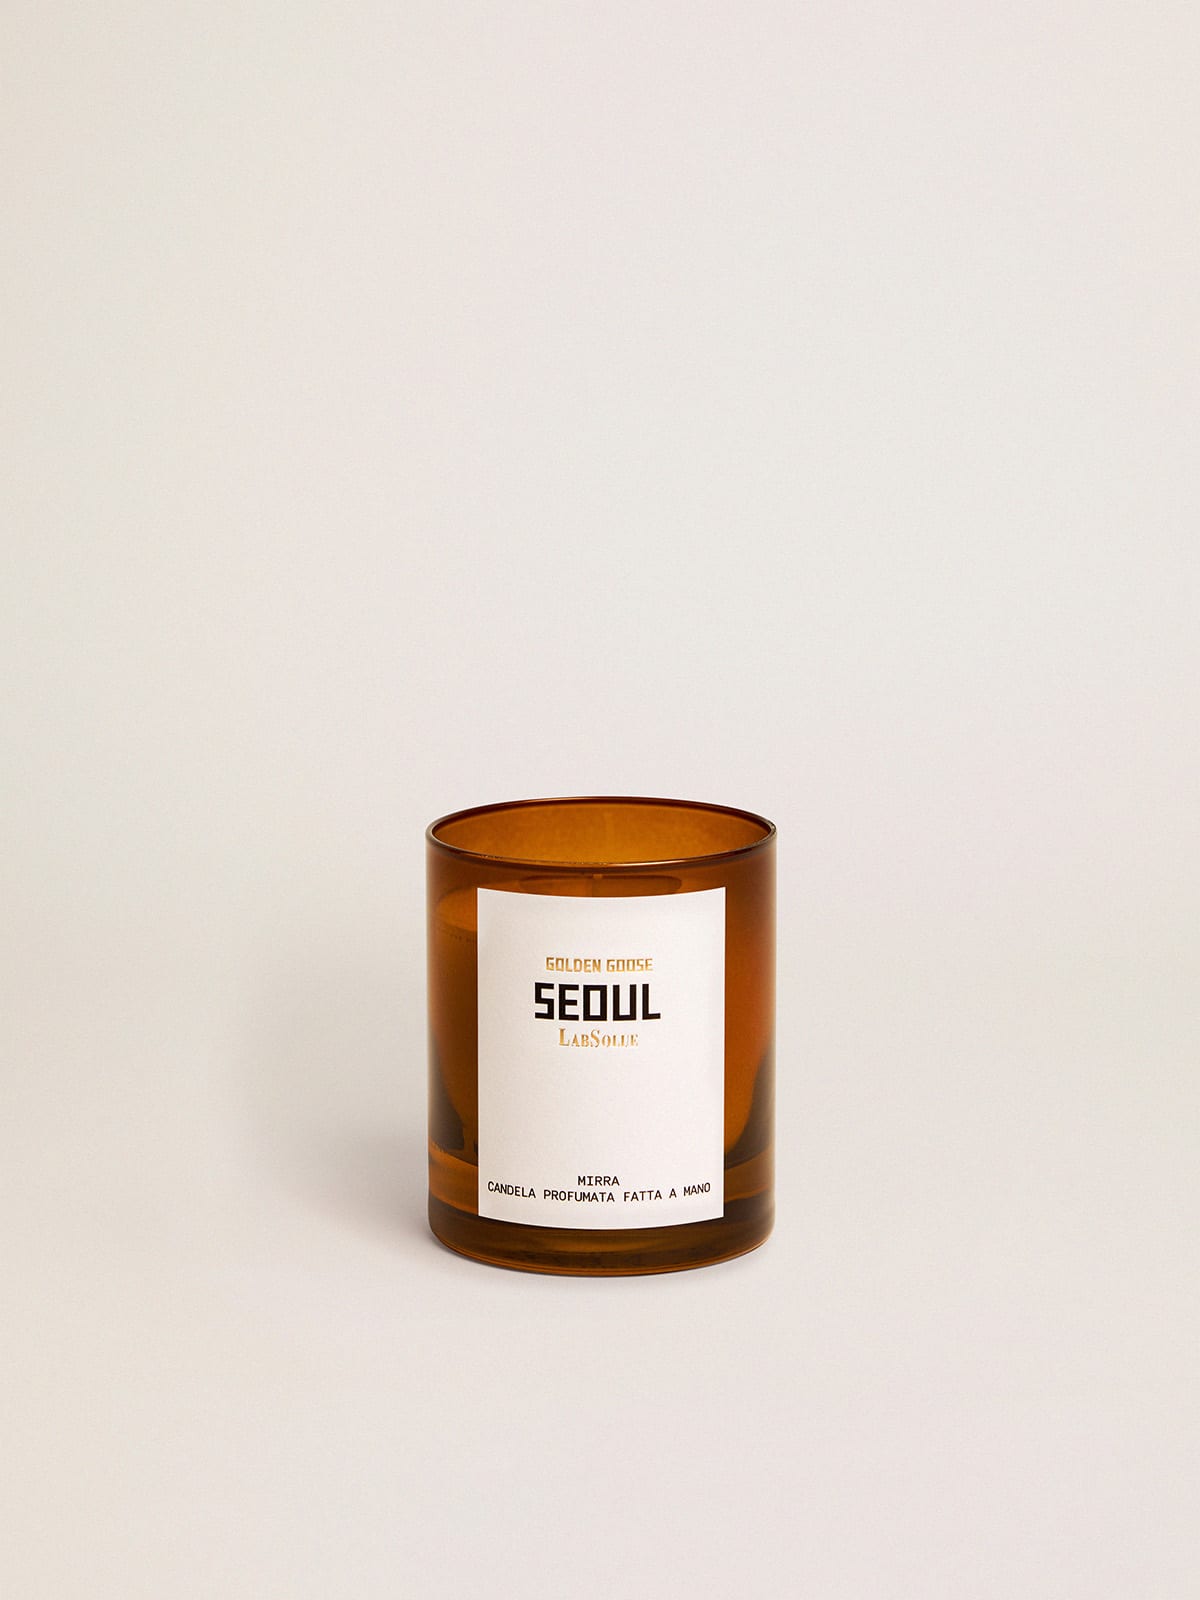 Golden Goose - Seoul Essence Myrrh Scented Candle 200 g in 